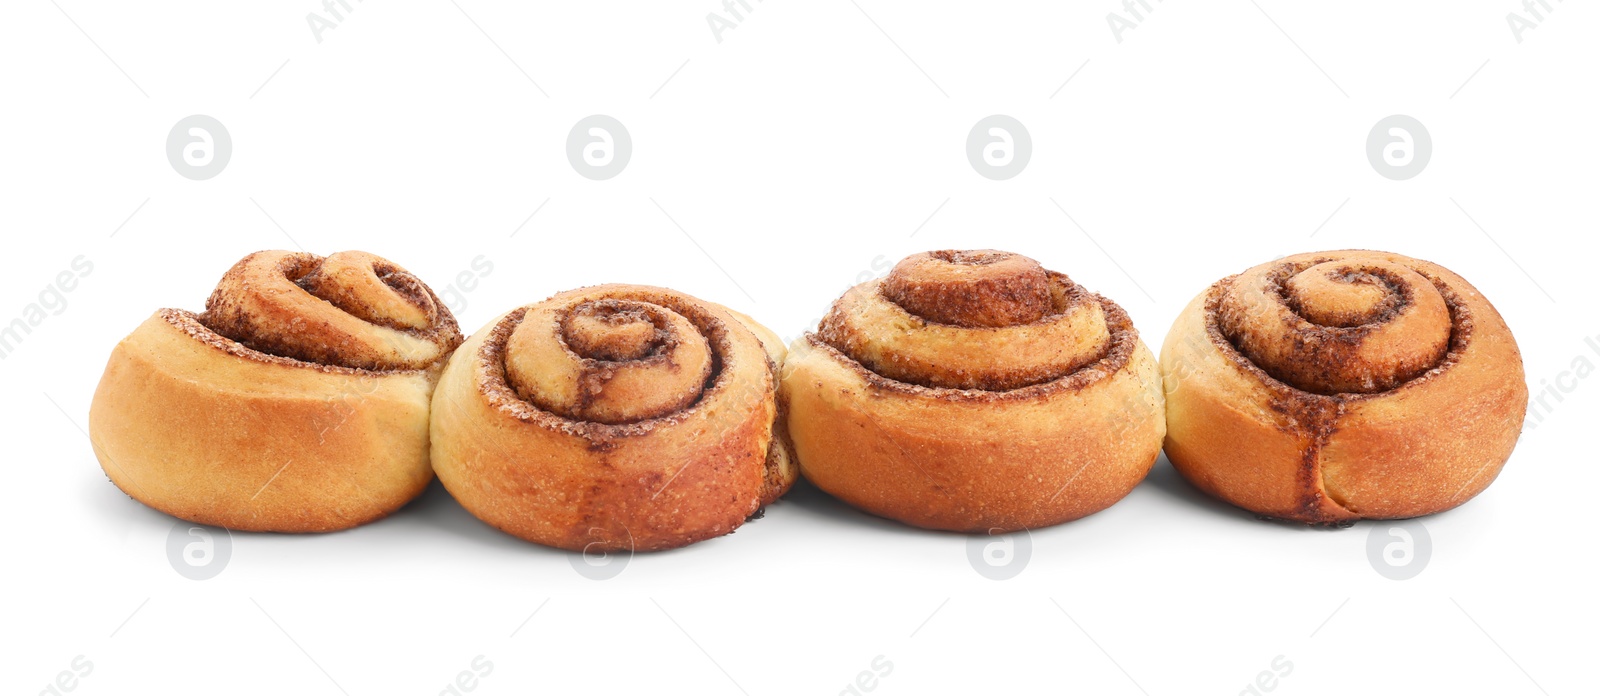 Photo of Tasty fresh cinnamon rolls isolated on white